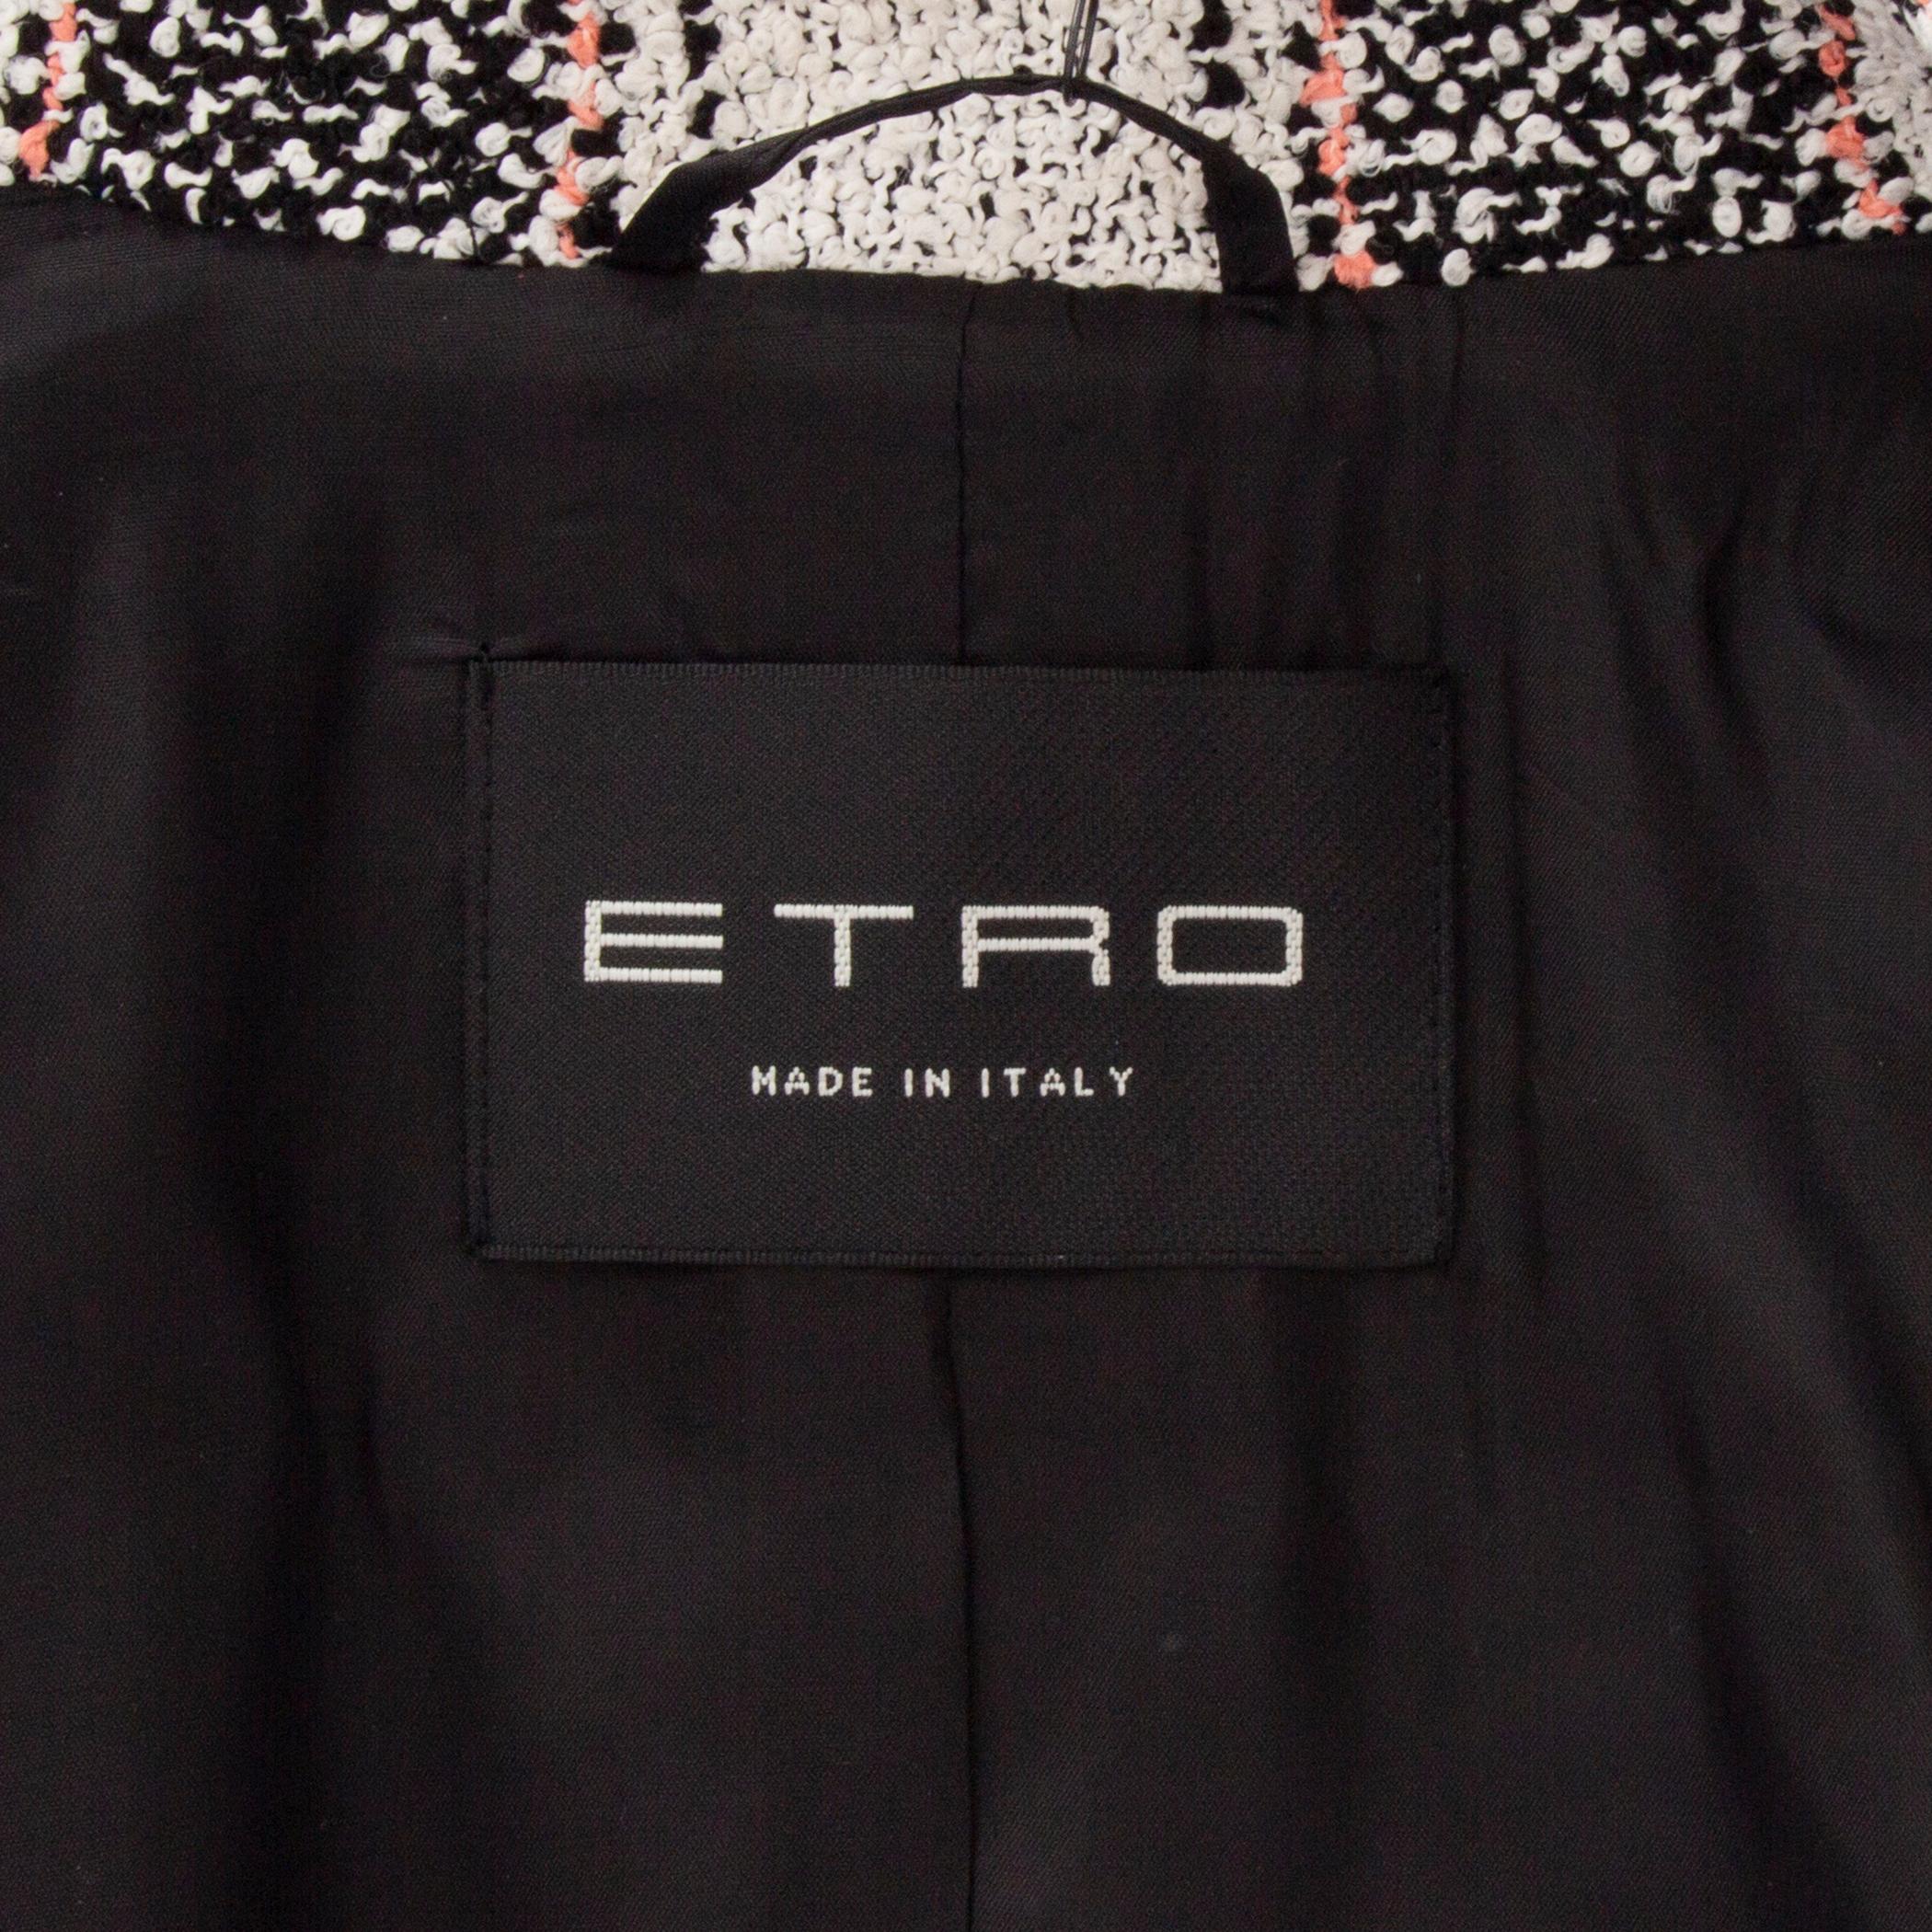 ETRO black & white linen TWEED CHECK Double-Breasted Coat Jacket 42 M 1